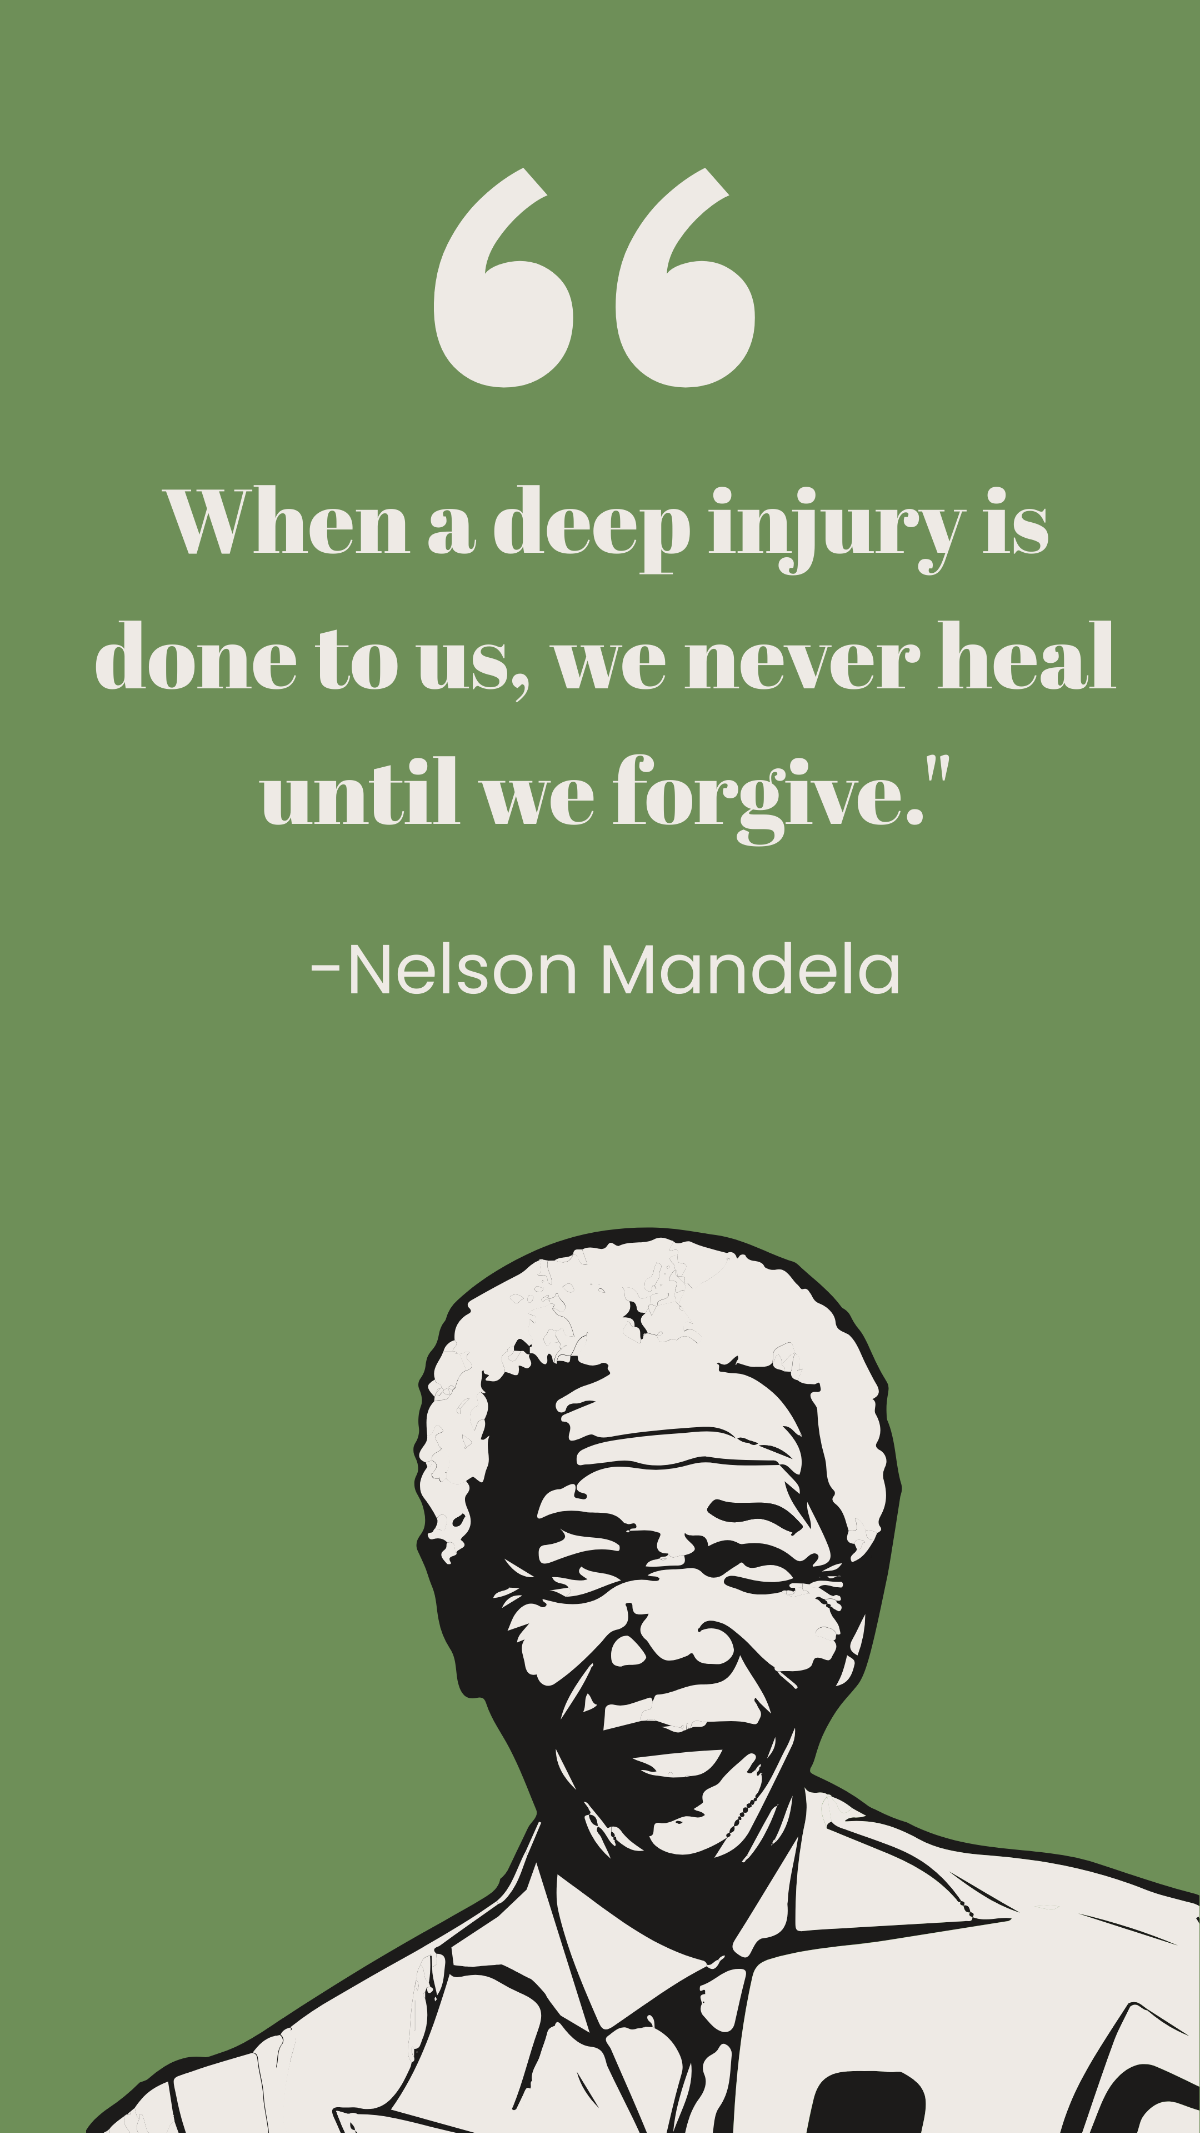 Nelson Mandela Forgiveness Quote